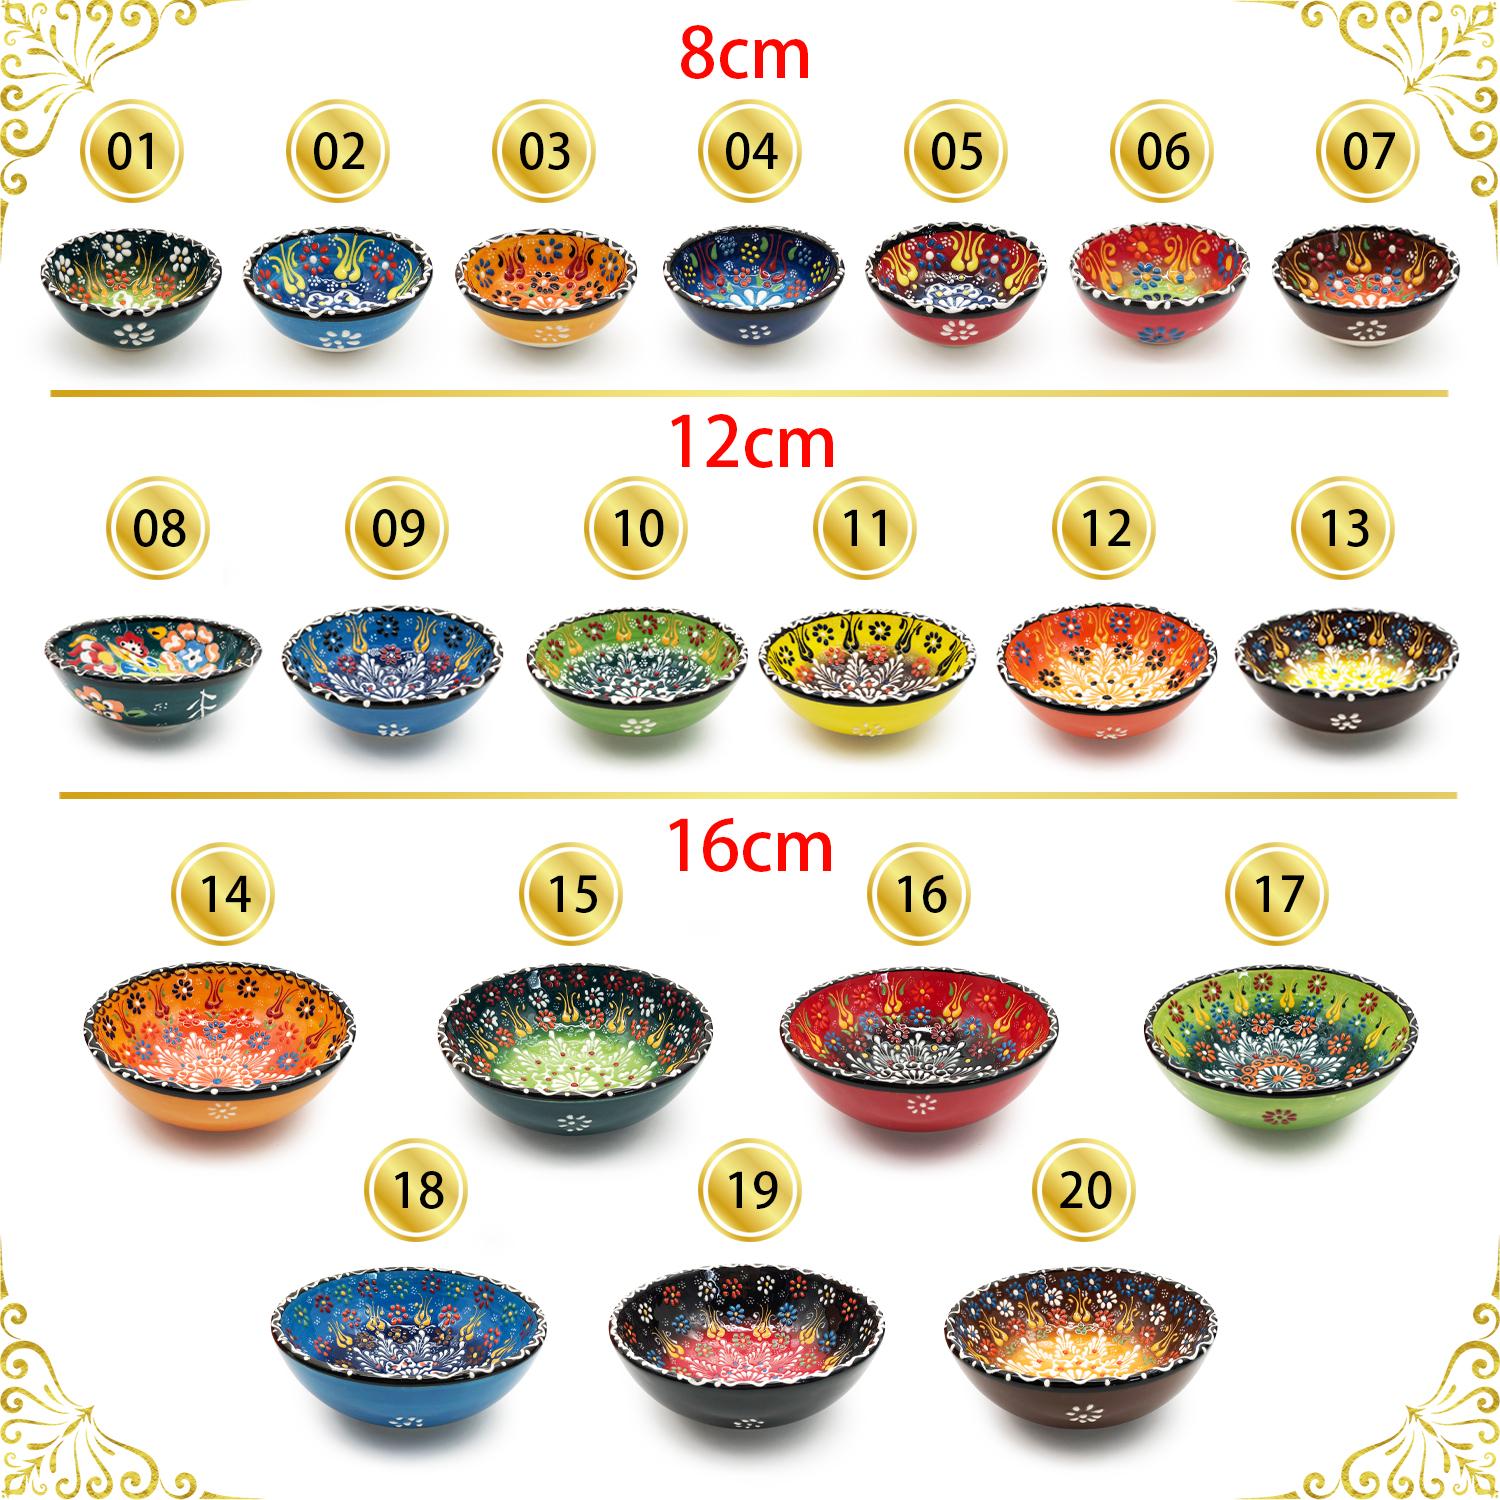 160MM手繪土耳其傳統工藝陶瓷碗， 土耳其餐具奧斯曼帝國浮雕圖案土耳其藝術時尚潮物(VTR-CERAMIC-BOWL-160MM-30203)